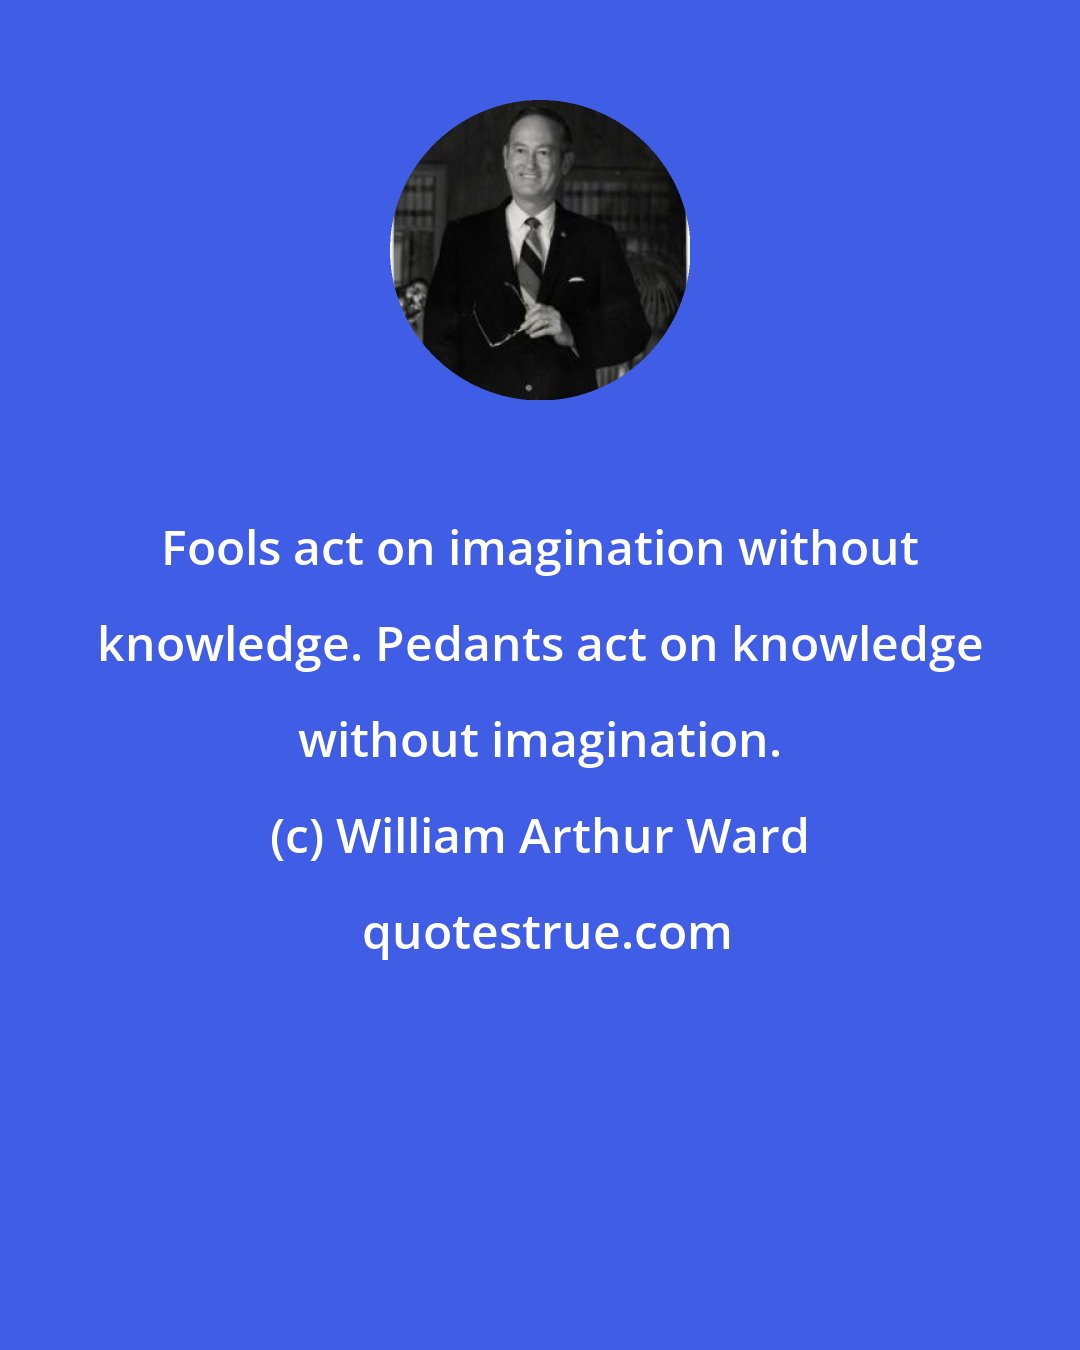 William Arthur Ward: Fools act on imagination without knowledge. Pedants act on knowledge without imagination.